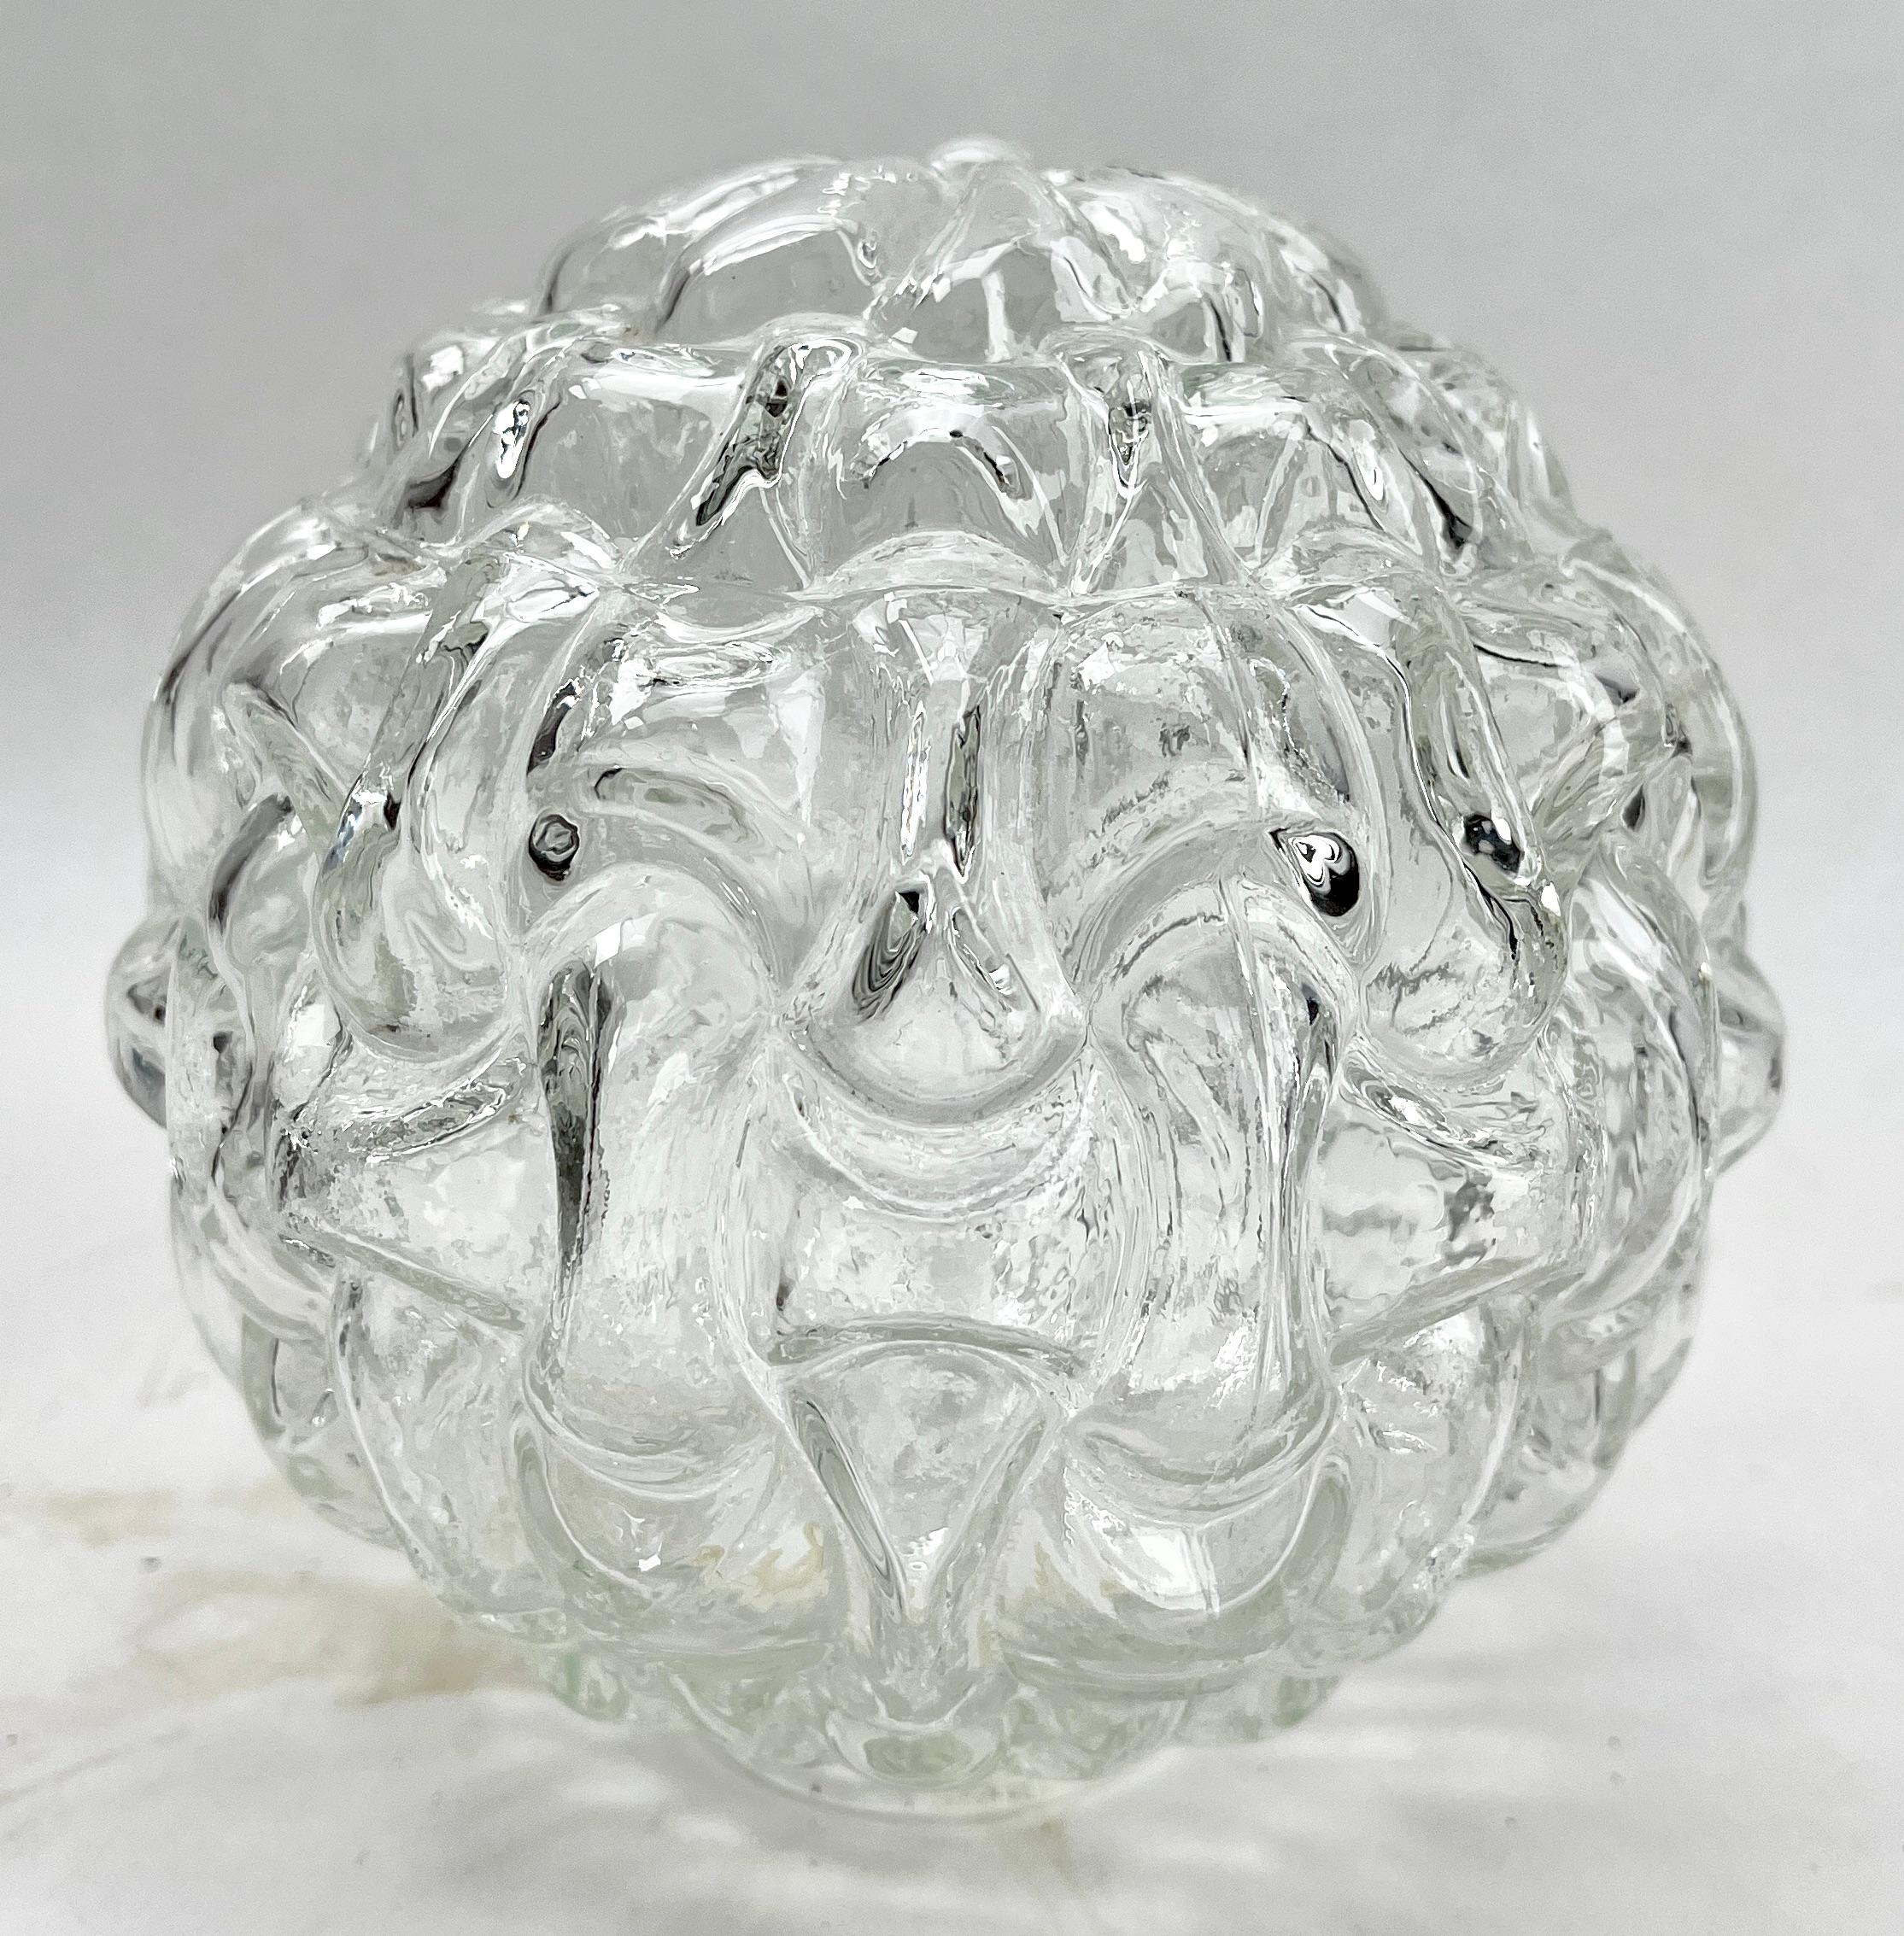  Swirl Ball Pendant Stem Lamp with 4 Globular Lights Massive Belgium 1960s For Sale 7